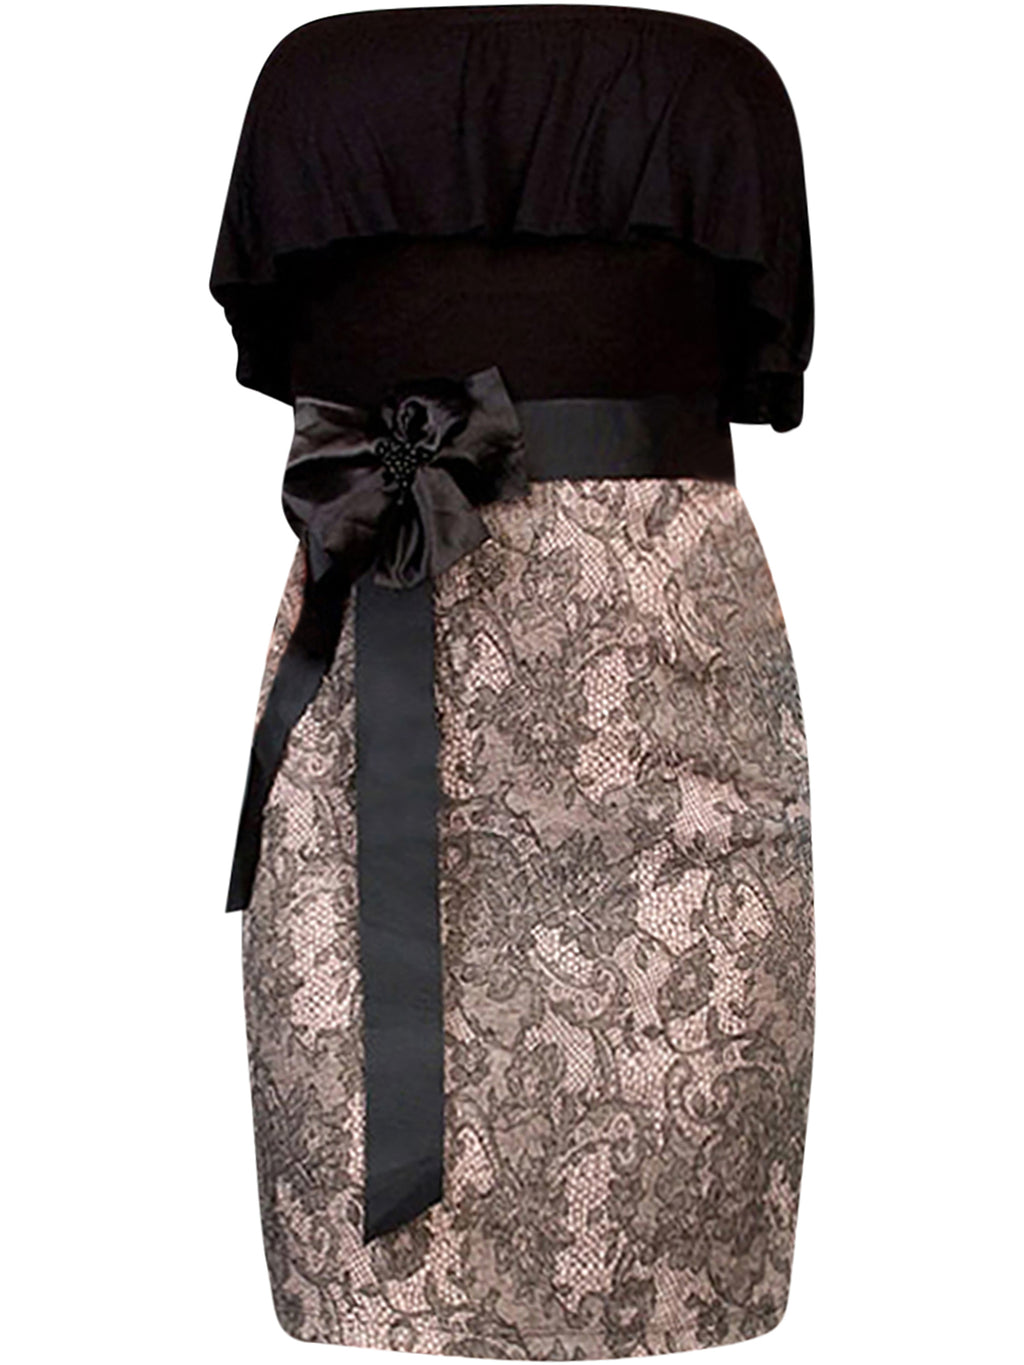 Elegant Black & Nude Floral Lace Strapless Dress